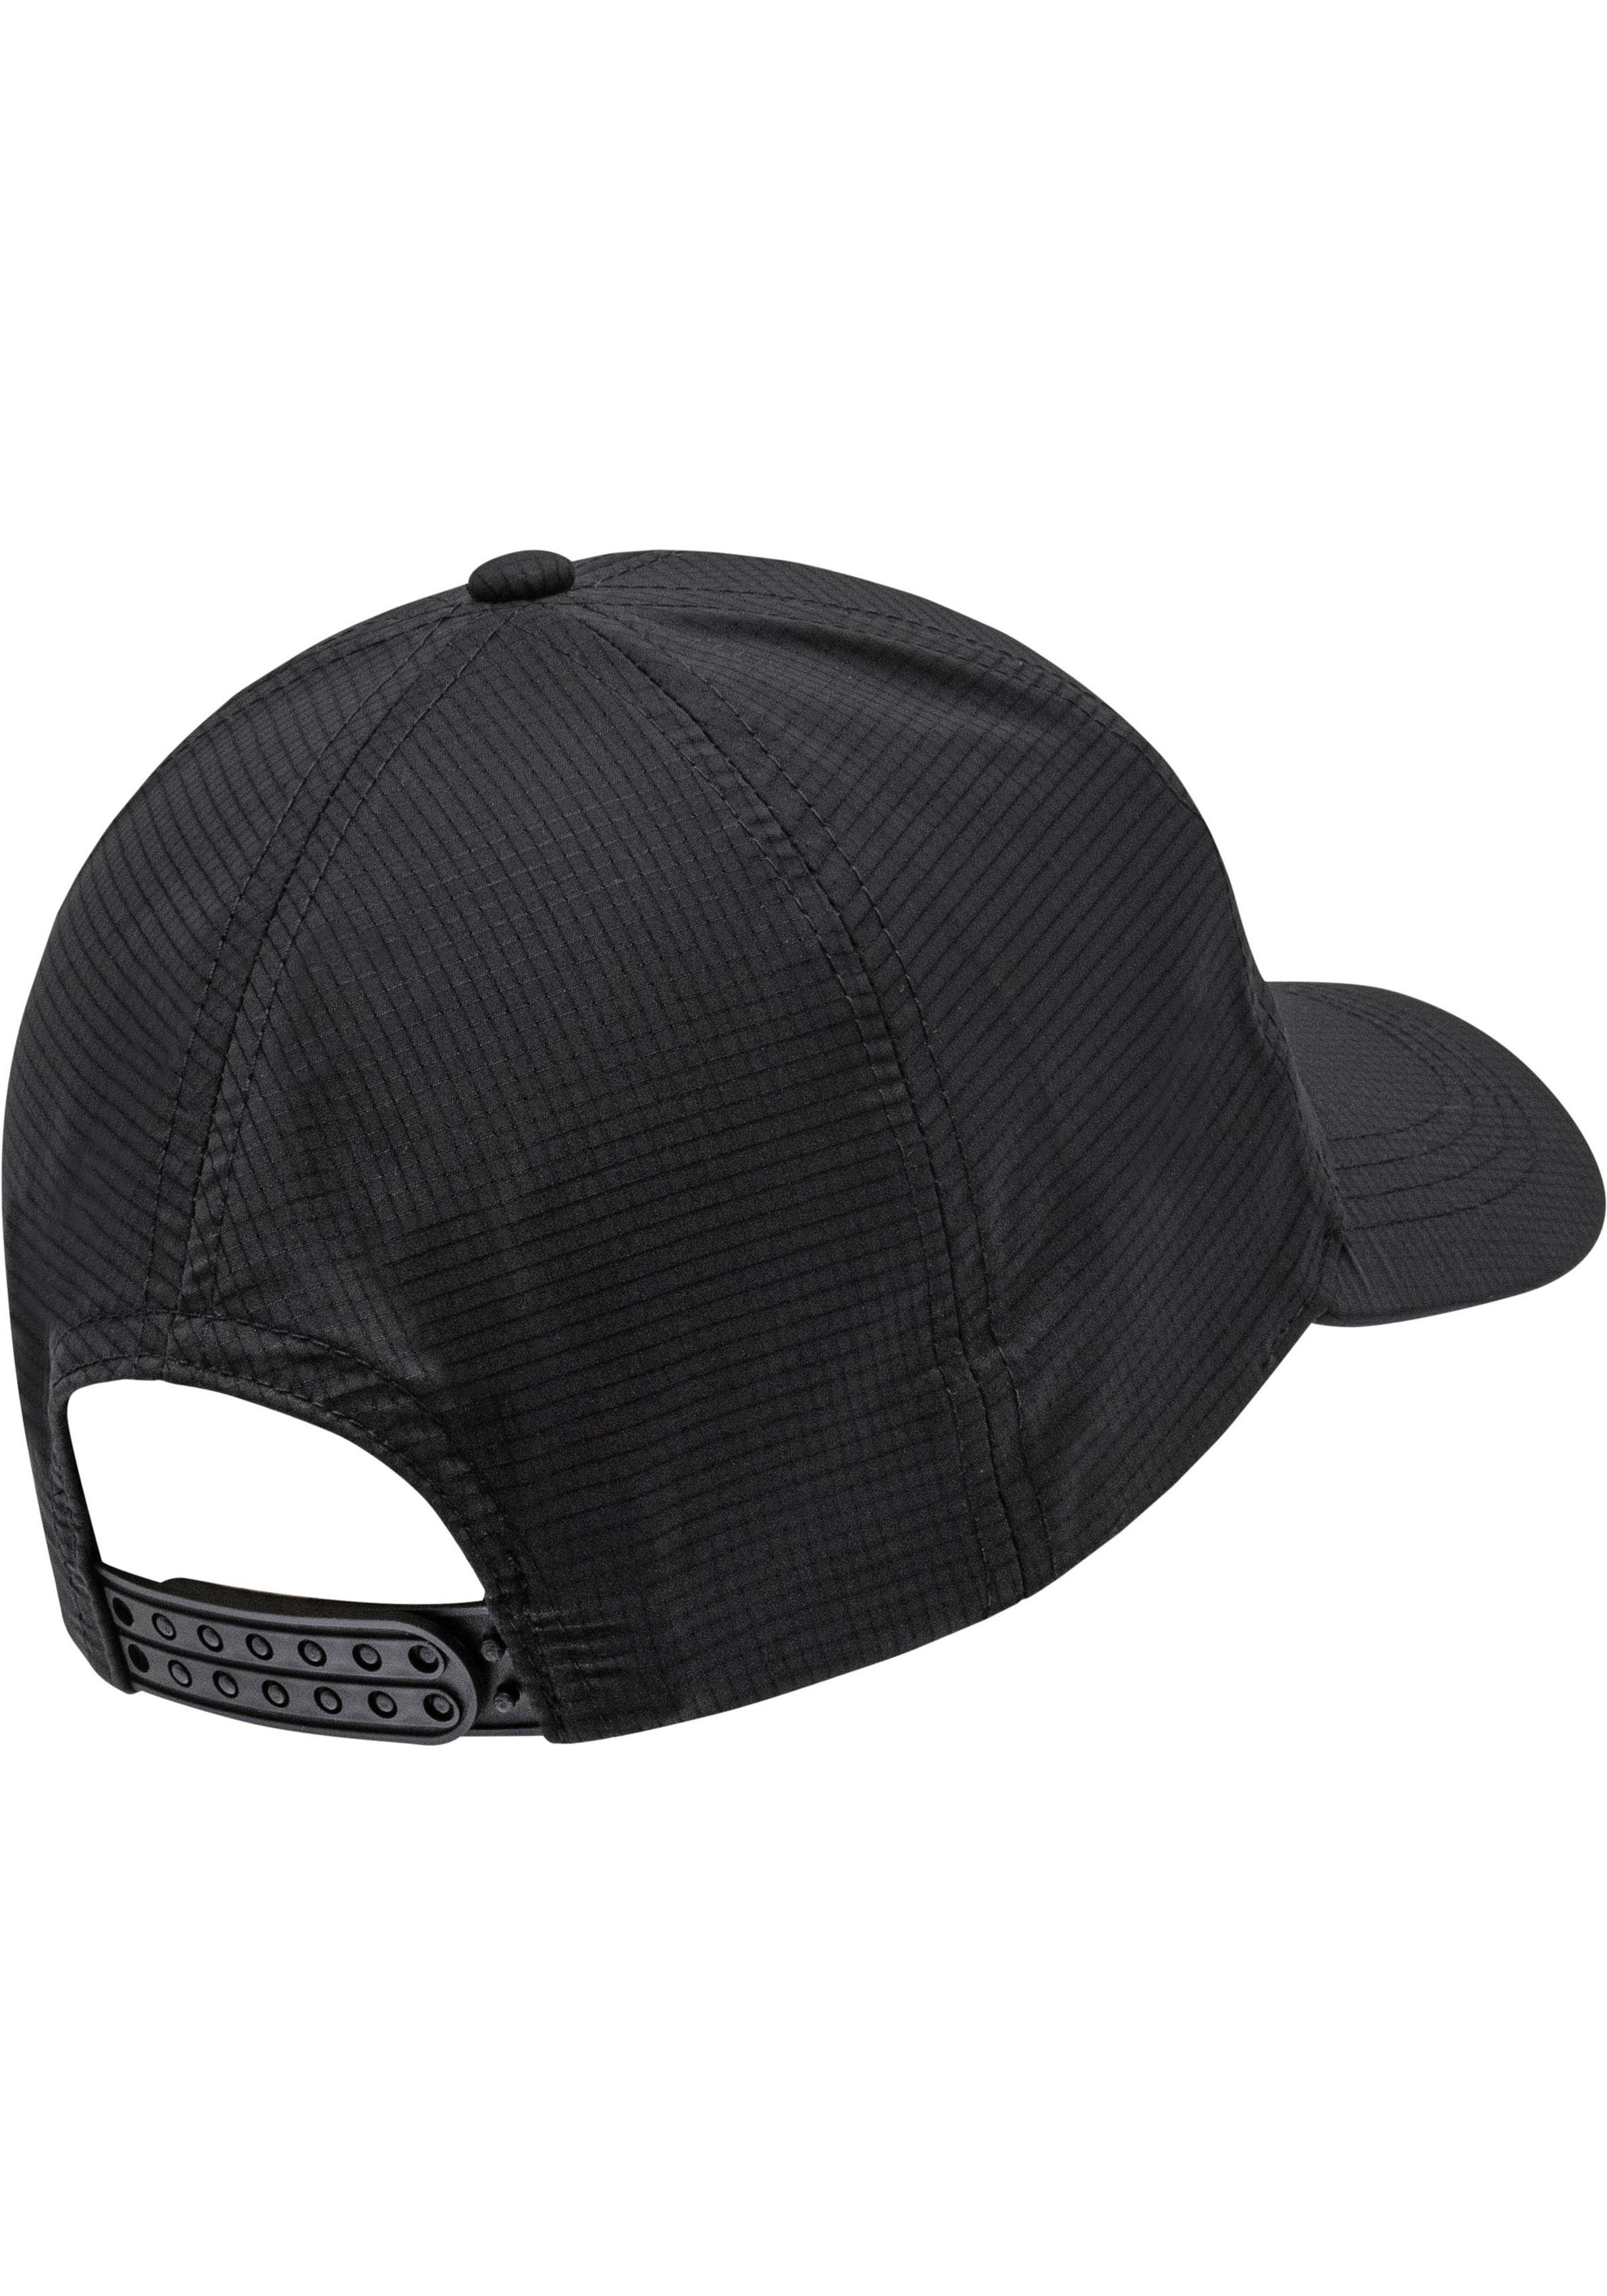 schwarz chillouts Langley Cap Baseball Hat